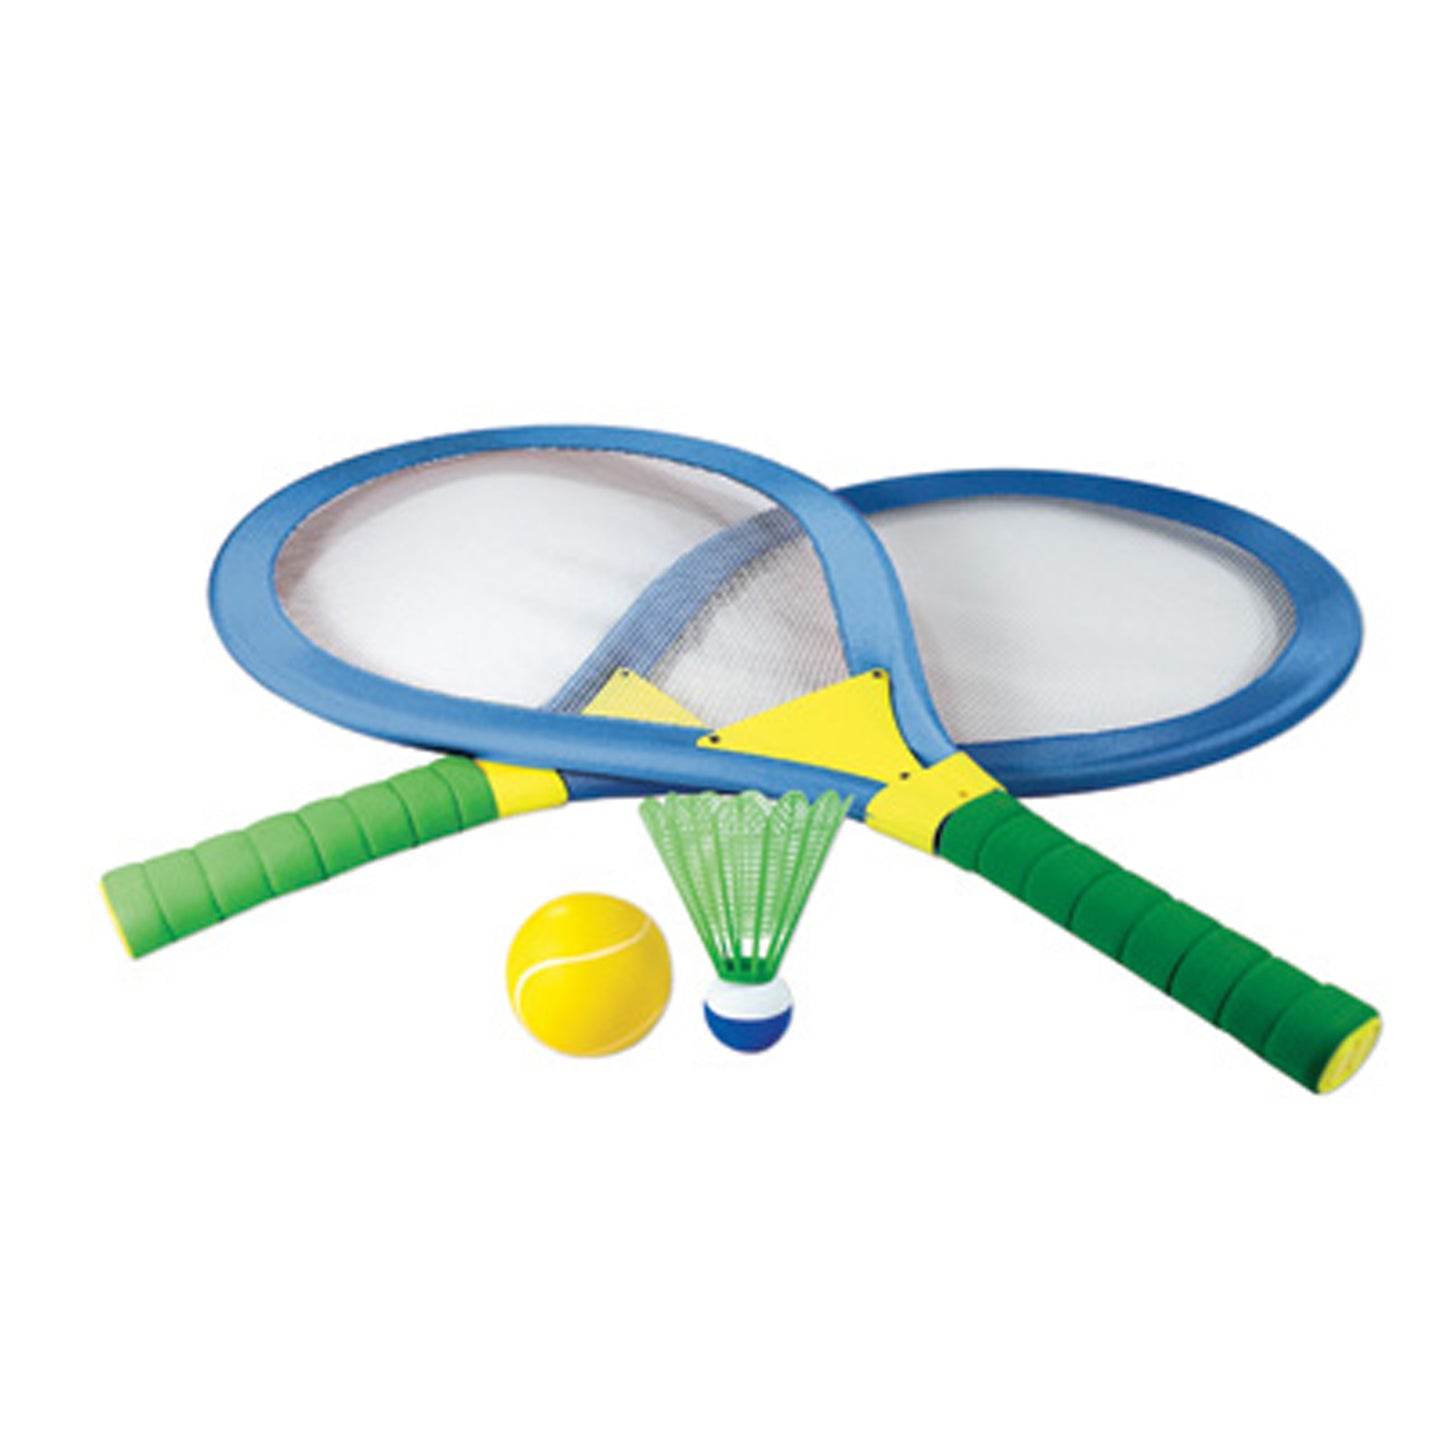 Giant Boomer Badminton Playset